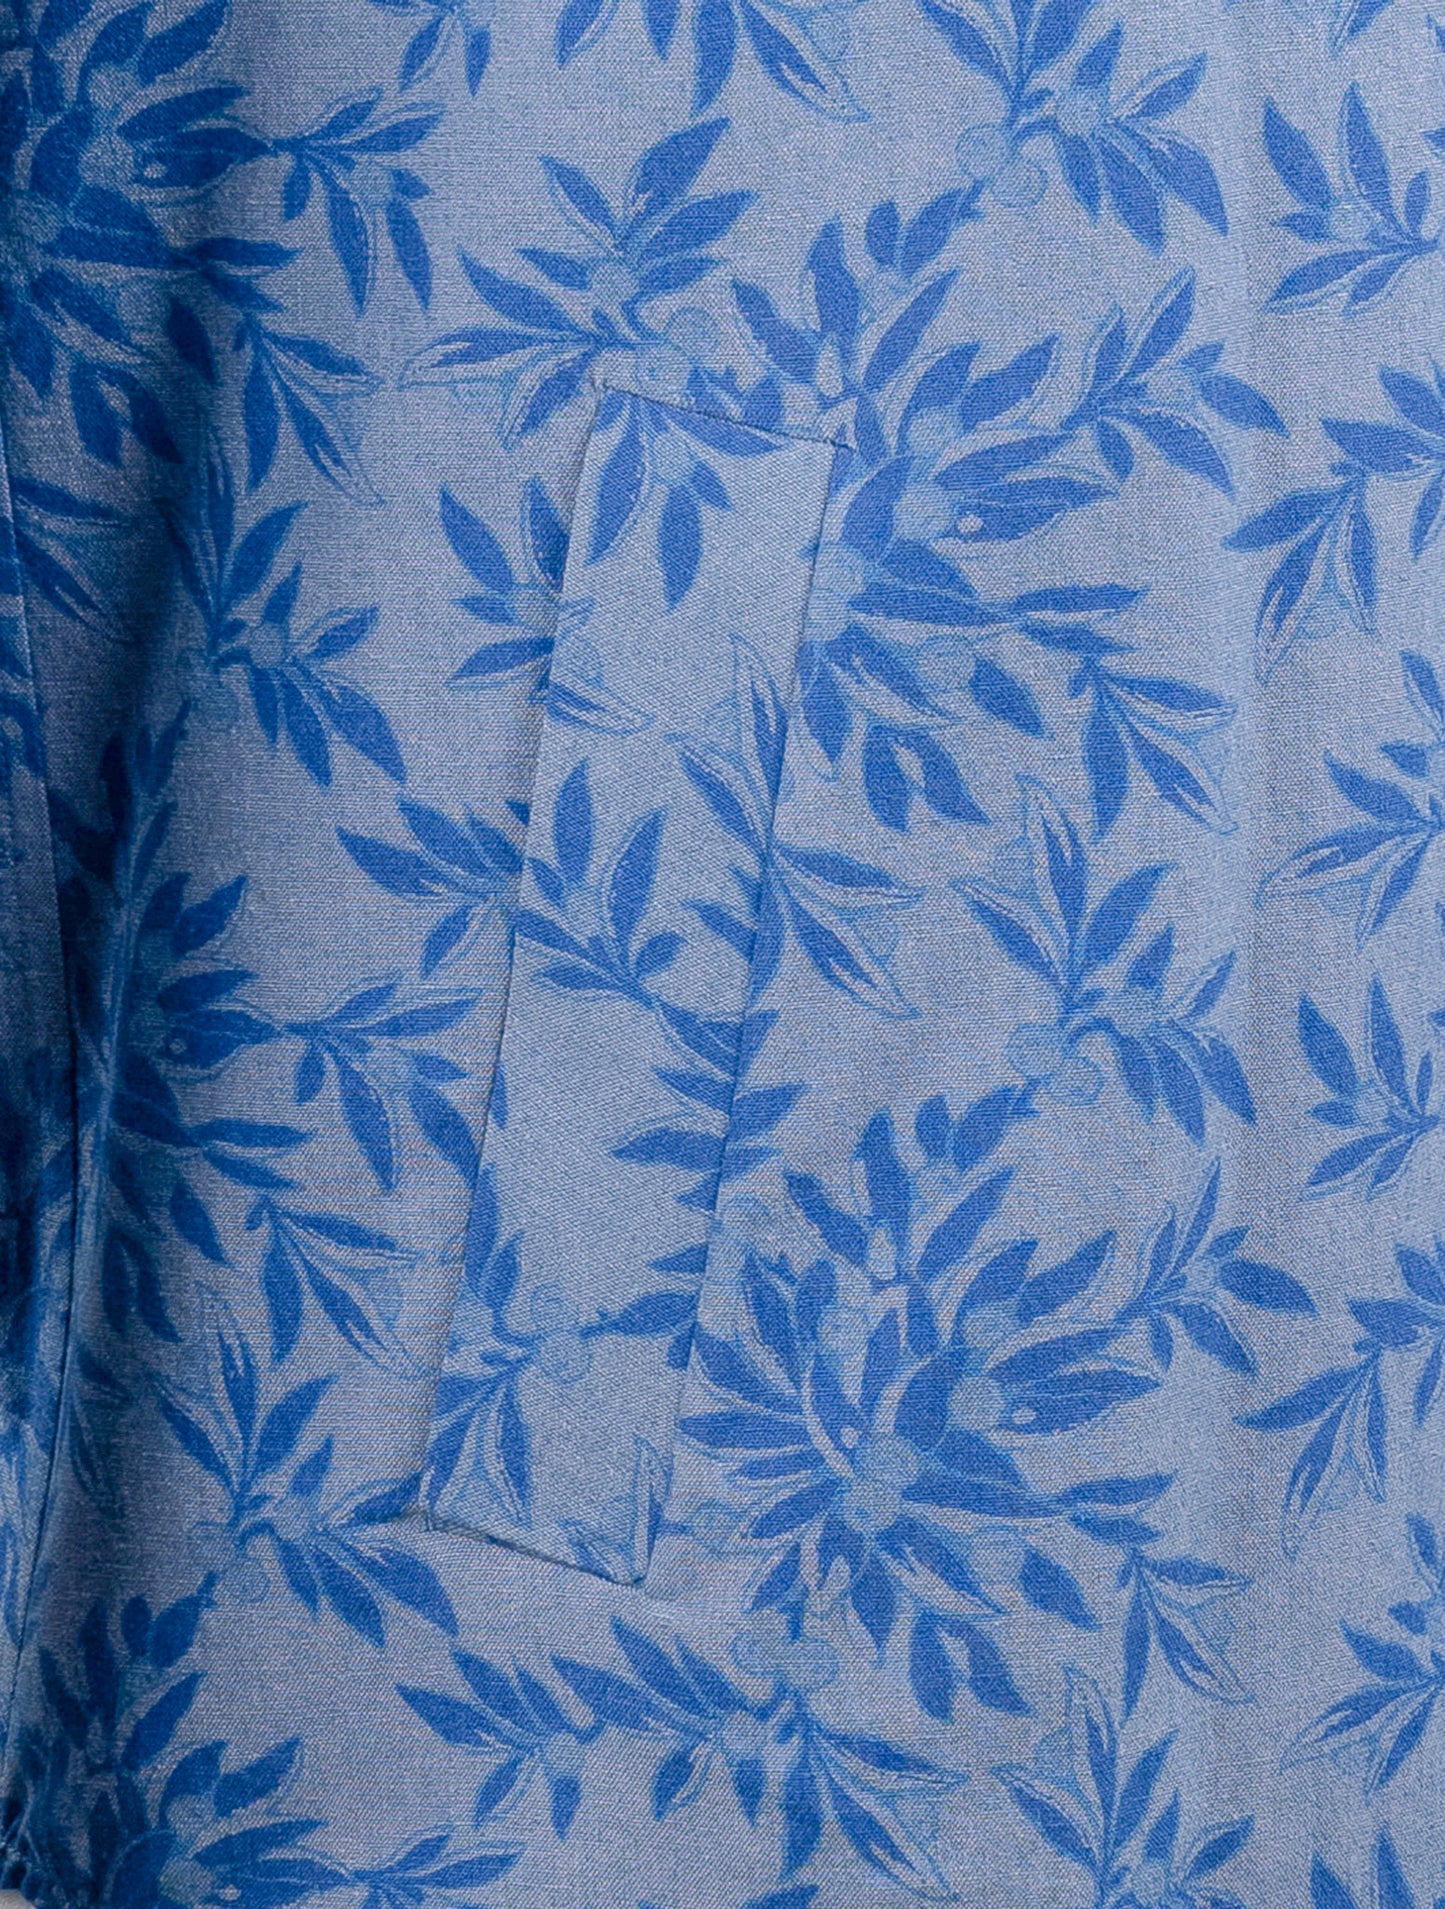 Kiton blue cotton sweatshirt mariano